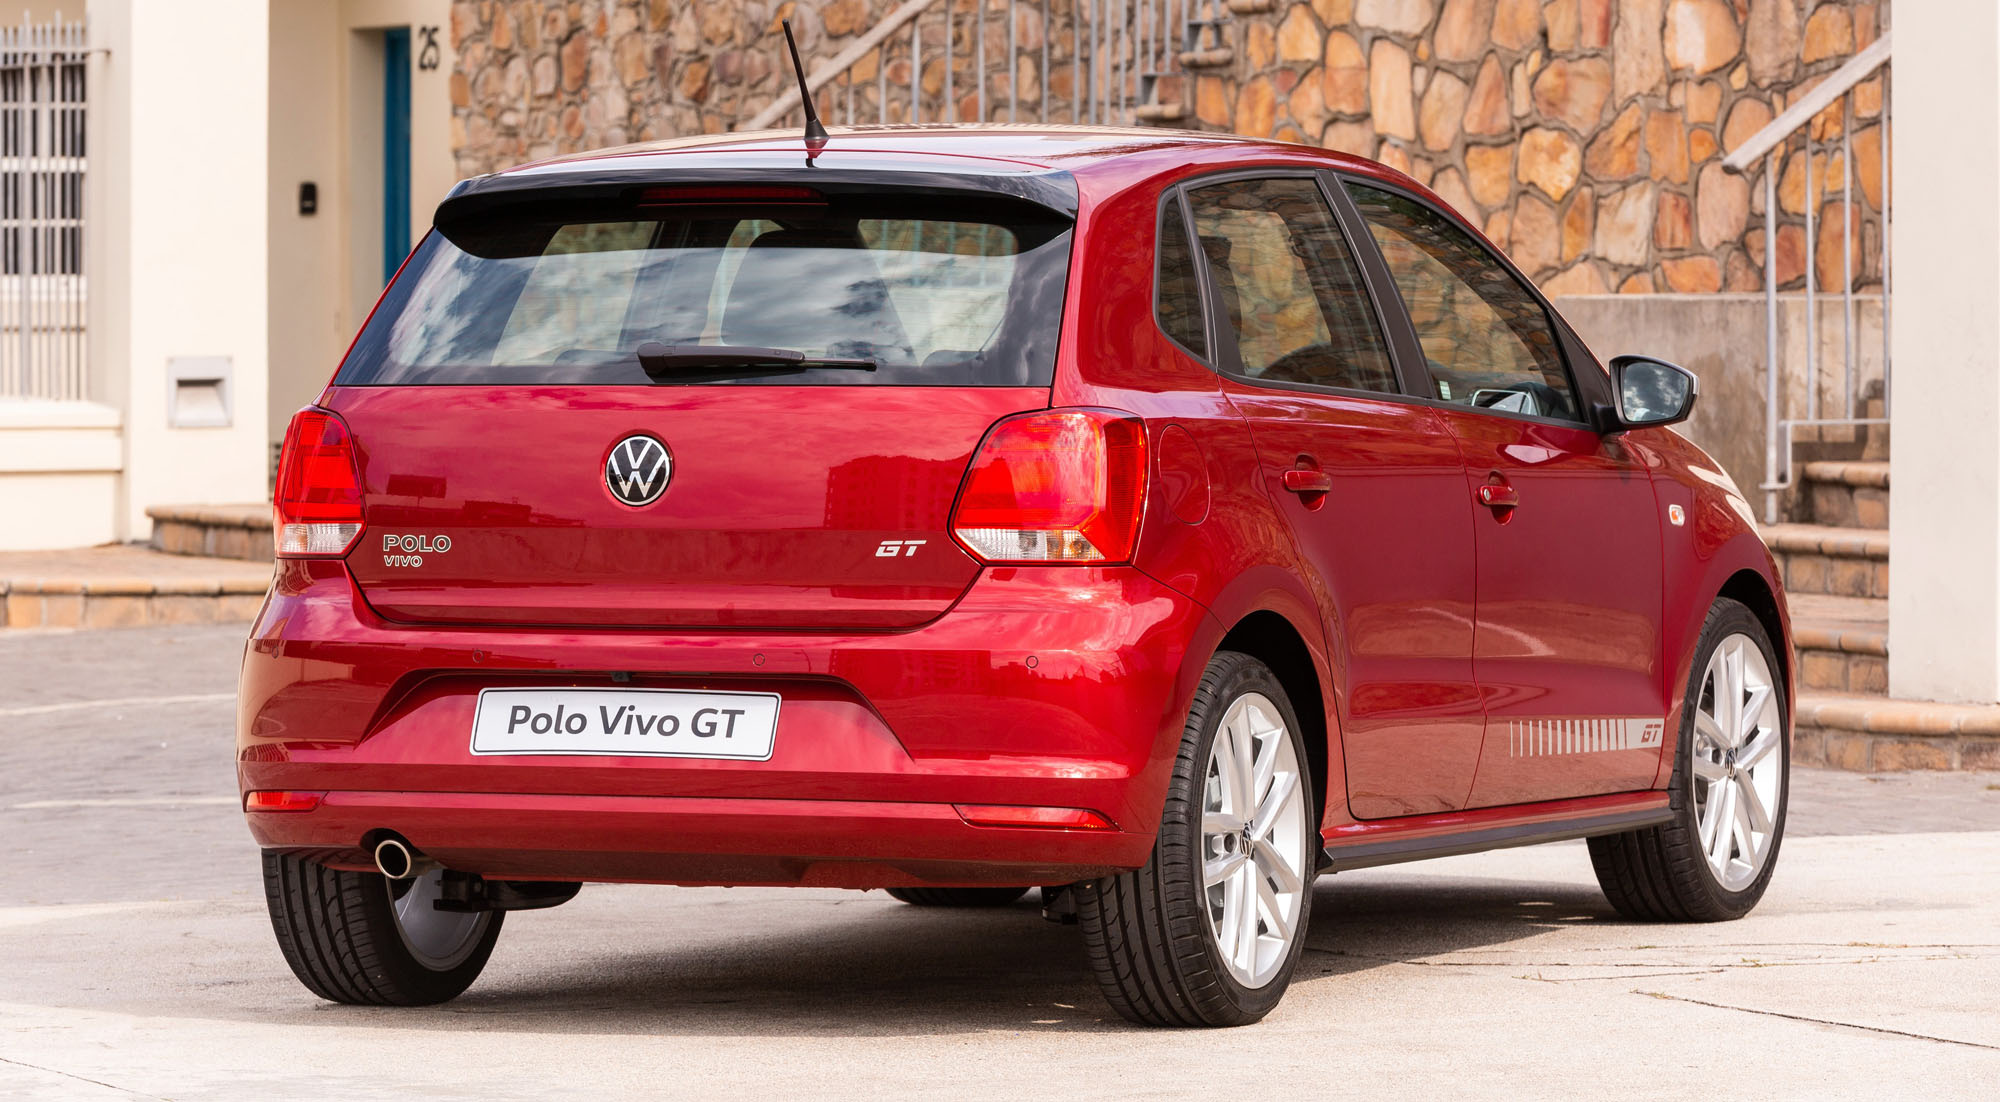 volkswagen, vw polo, vw polo vivo, new vw polo vivo gt vs cheapest vw polo – the difference r1,600 makes